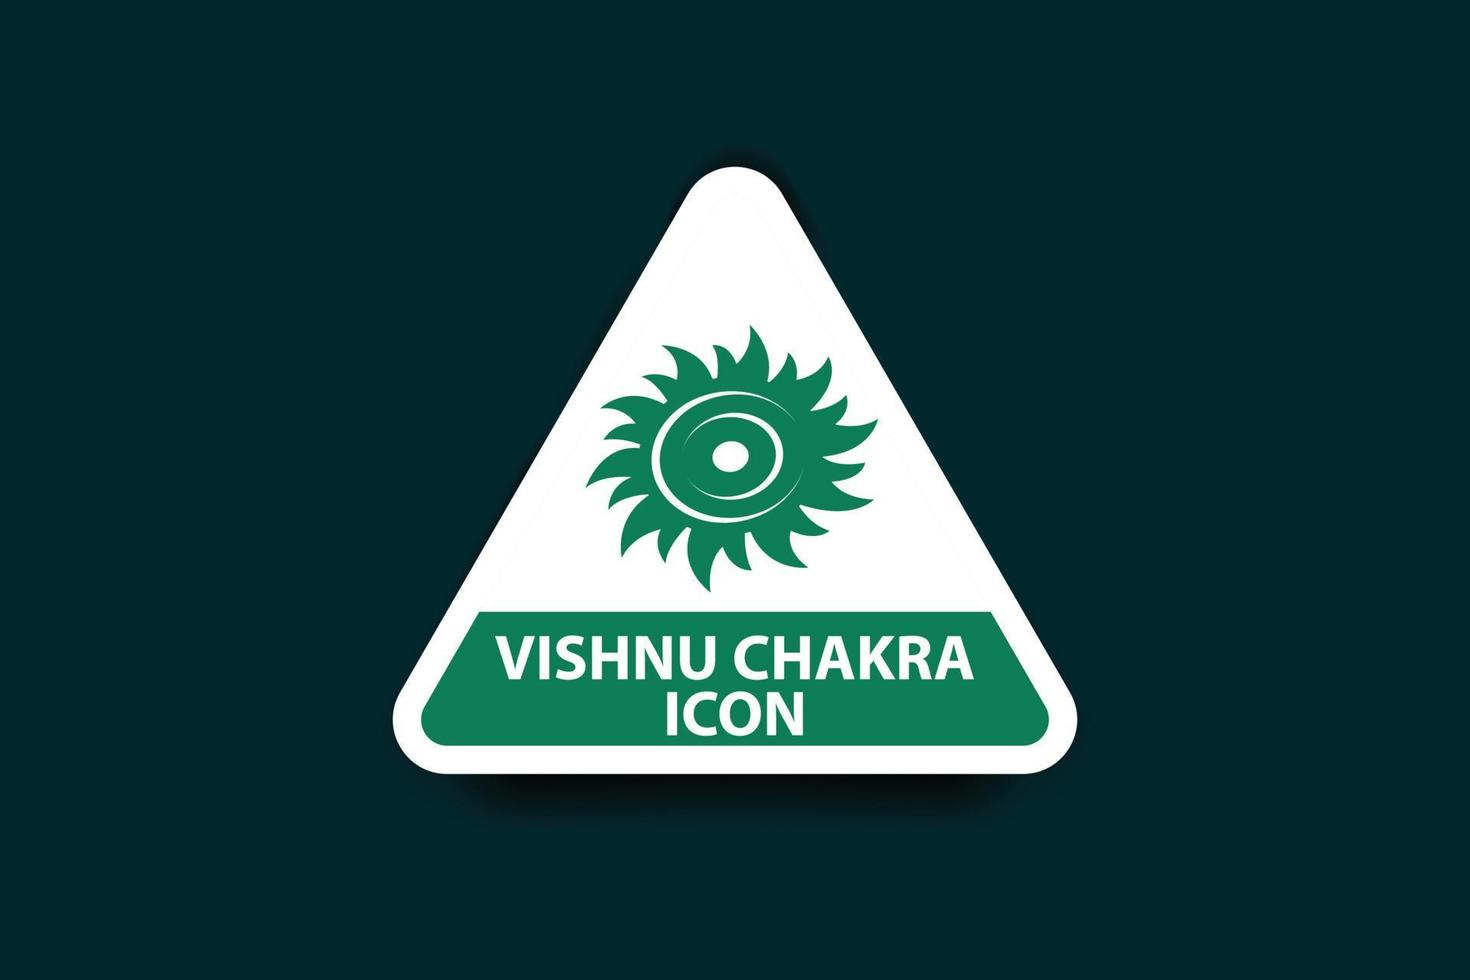 Chakra icon and vishnu chakra design vector